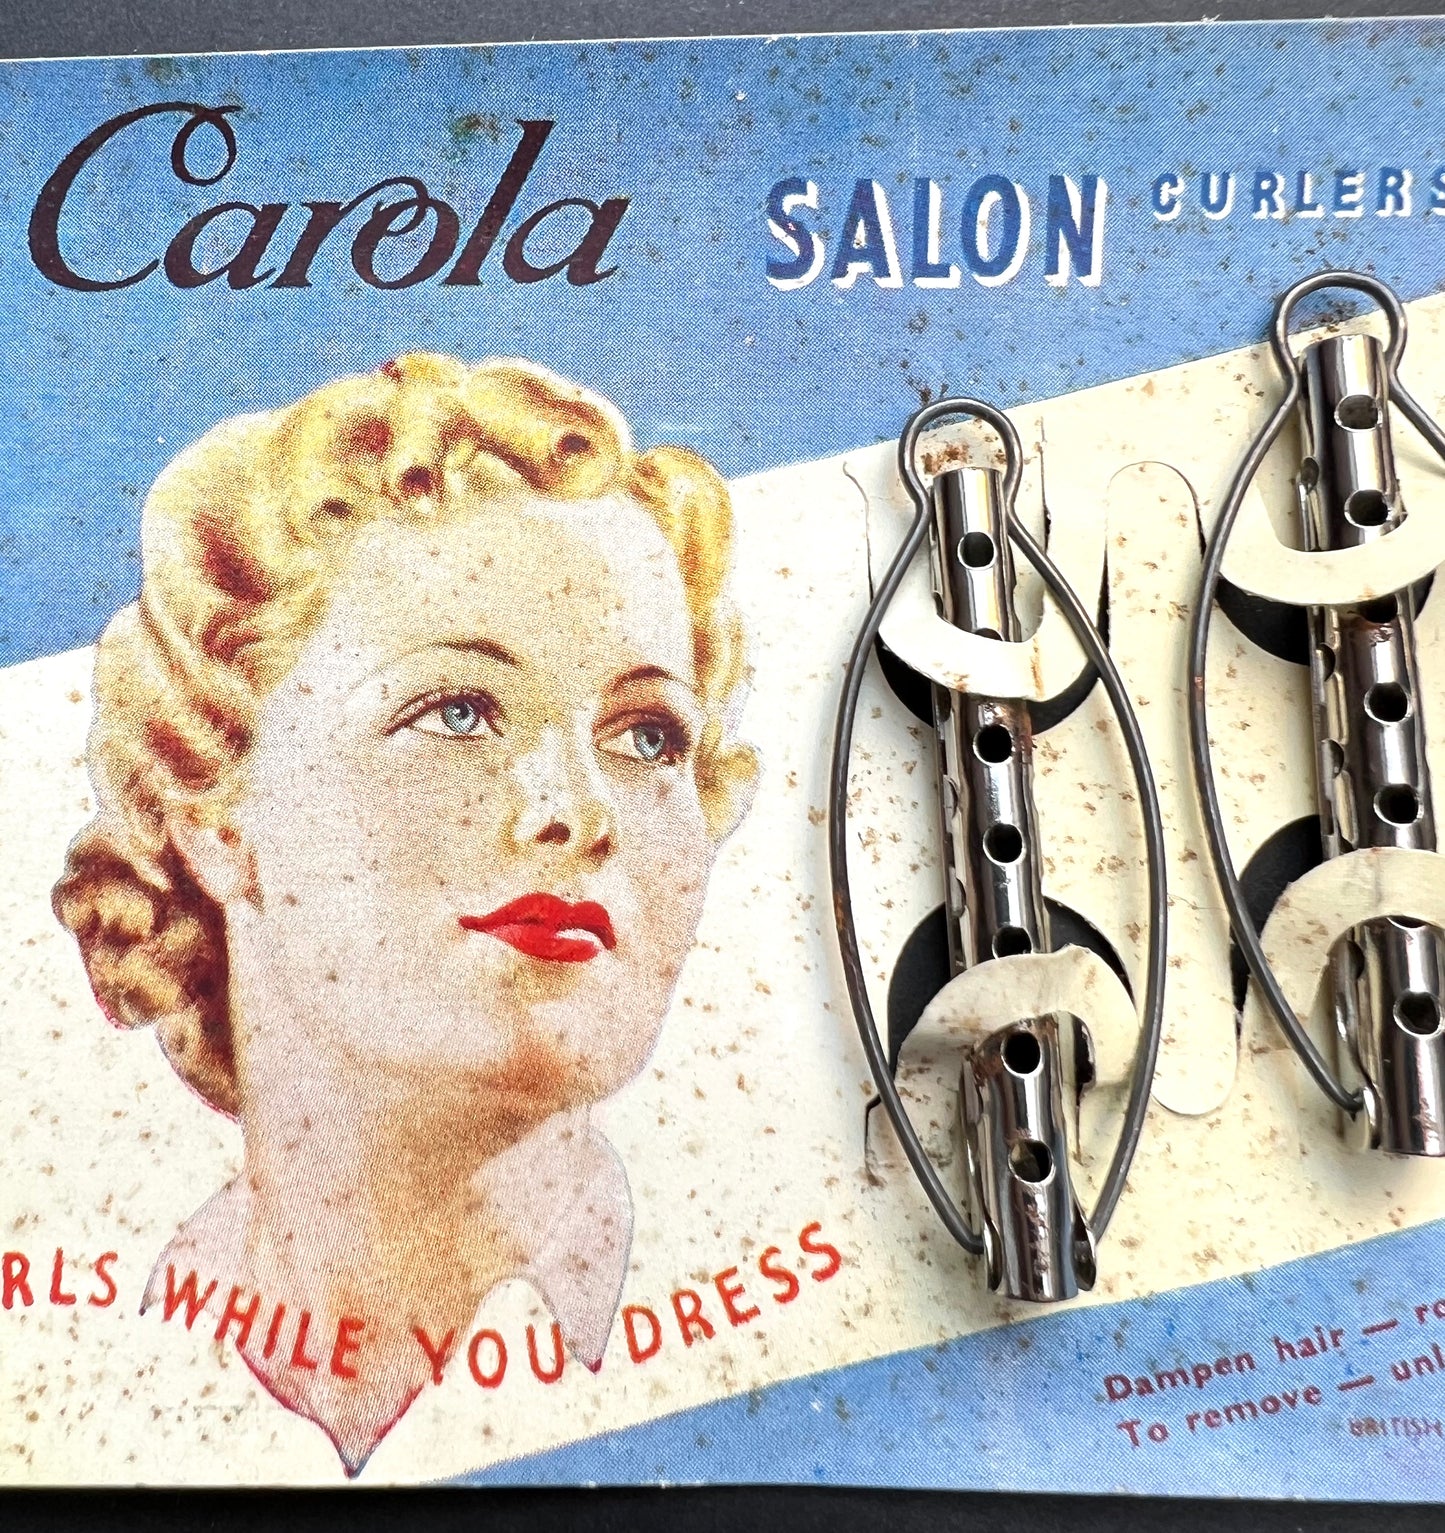 1930's Carola SALON CURLERS "Curl While You Dress"